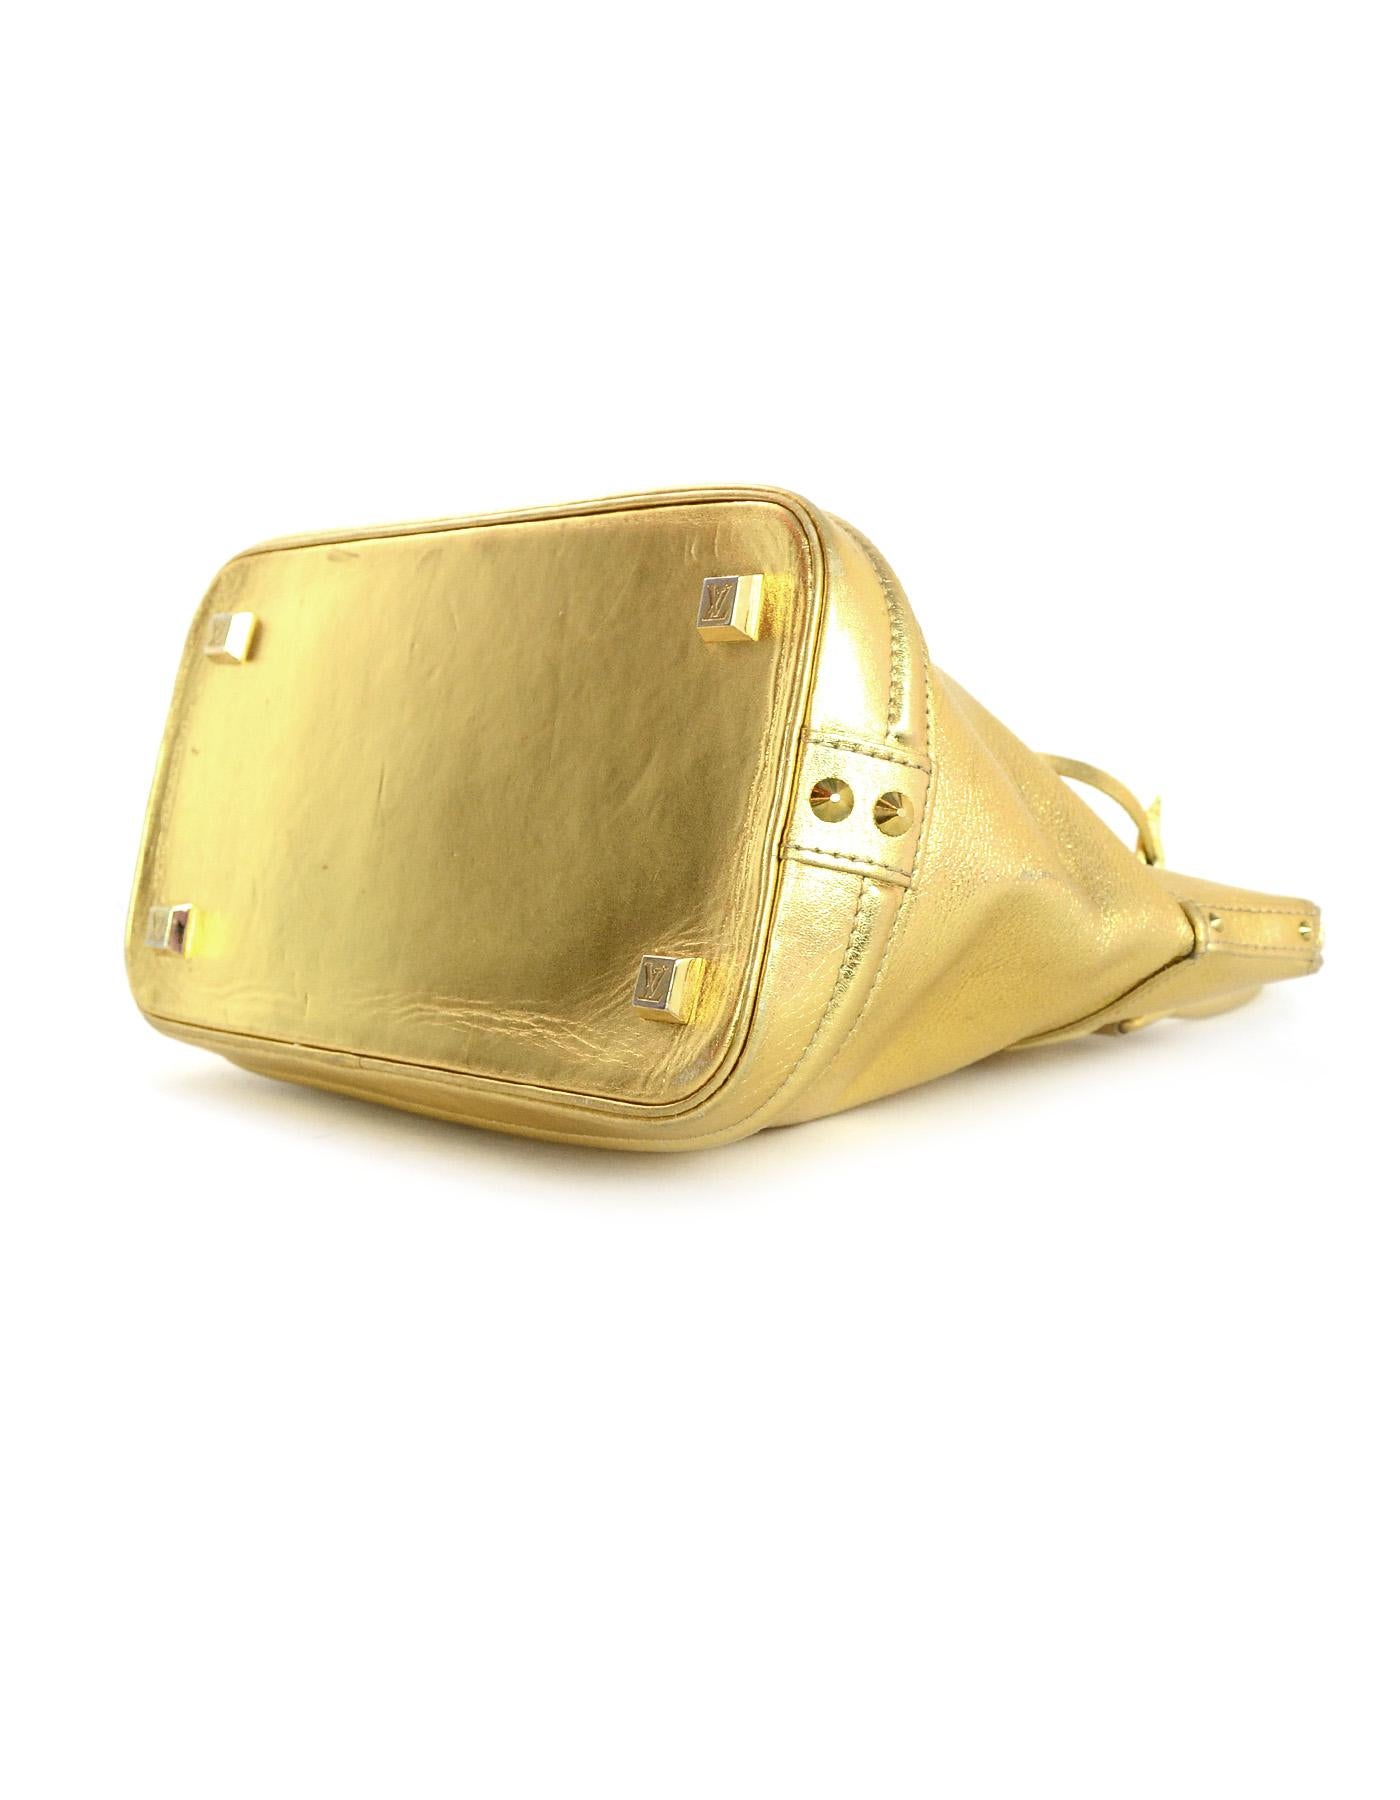 Brown Louis Vuitton Gold Suhali Leather Lockit PM Bag W/ Lock/Keys/Clochette